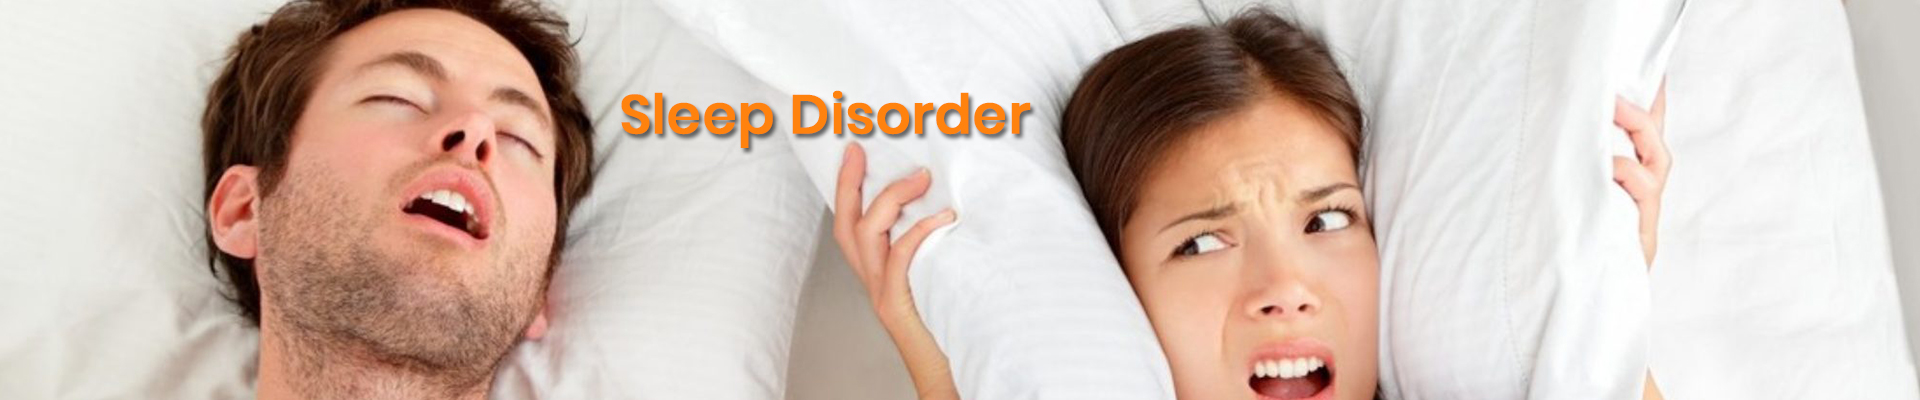 sleep-disorder treatment